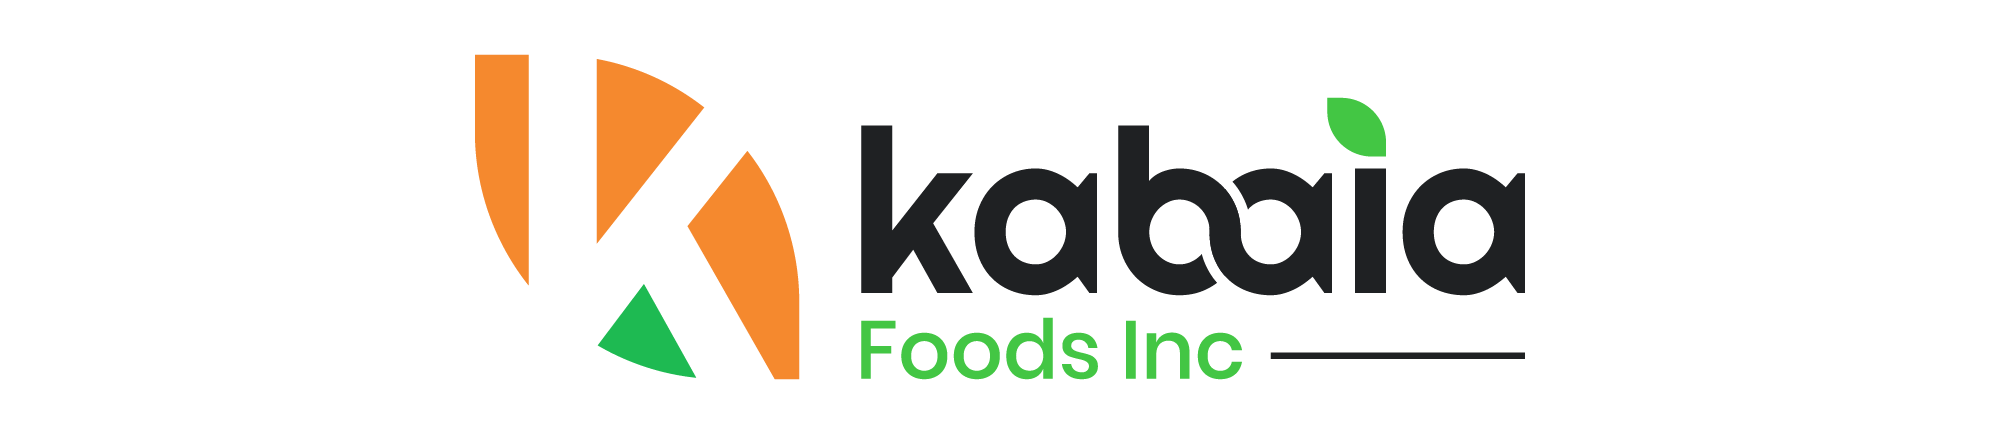 Kabaia Foods Inc